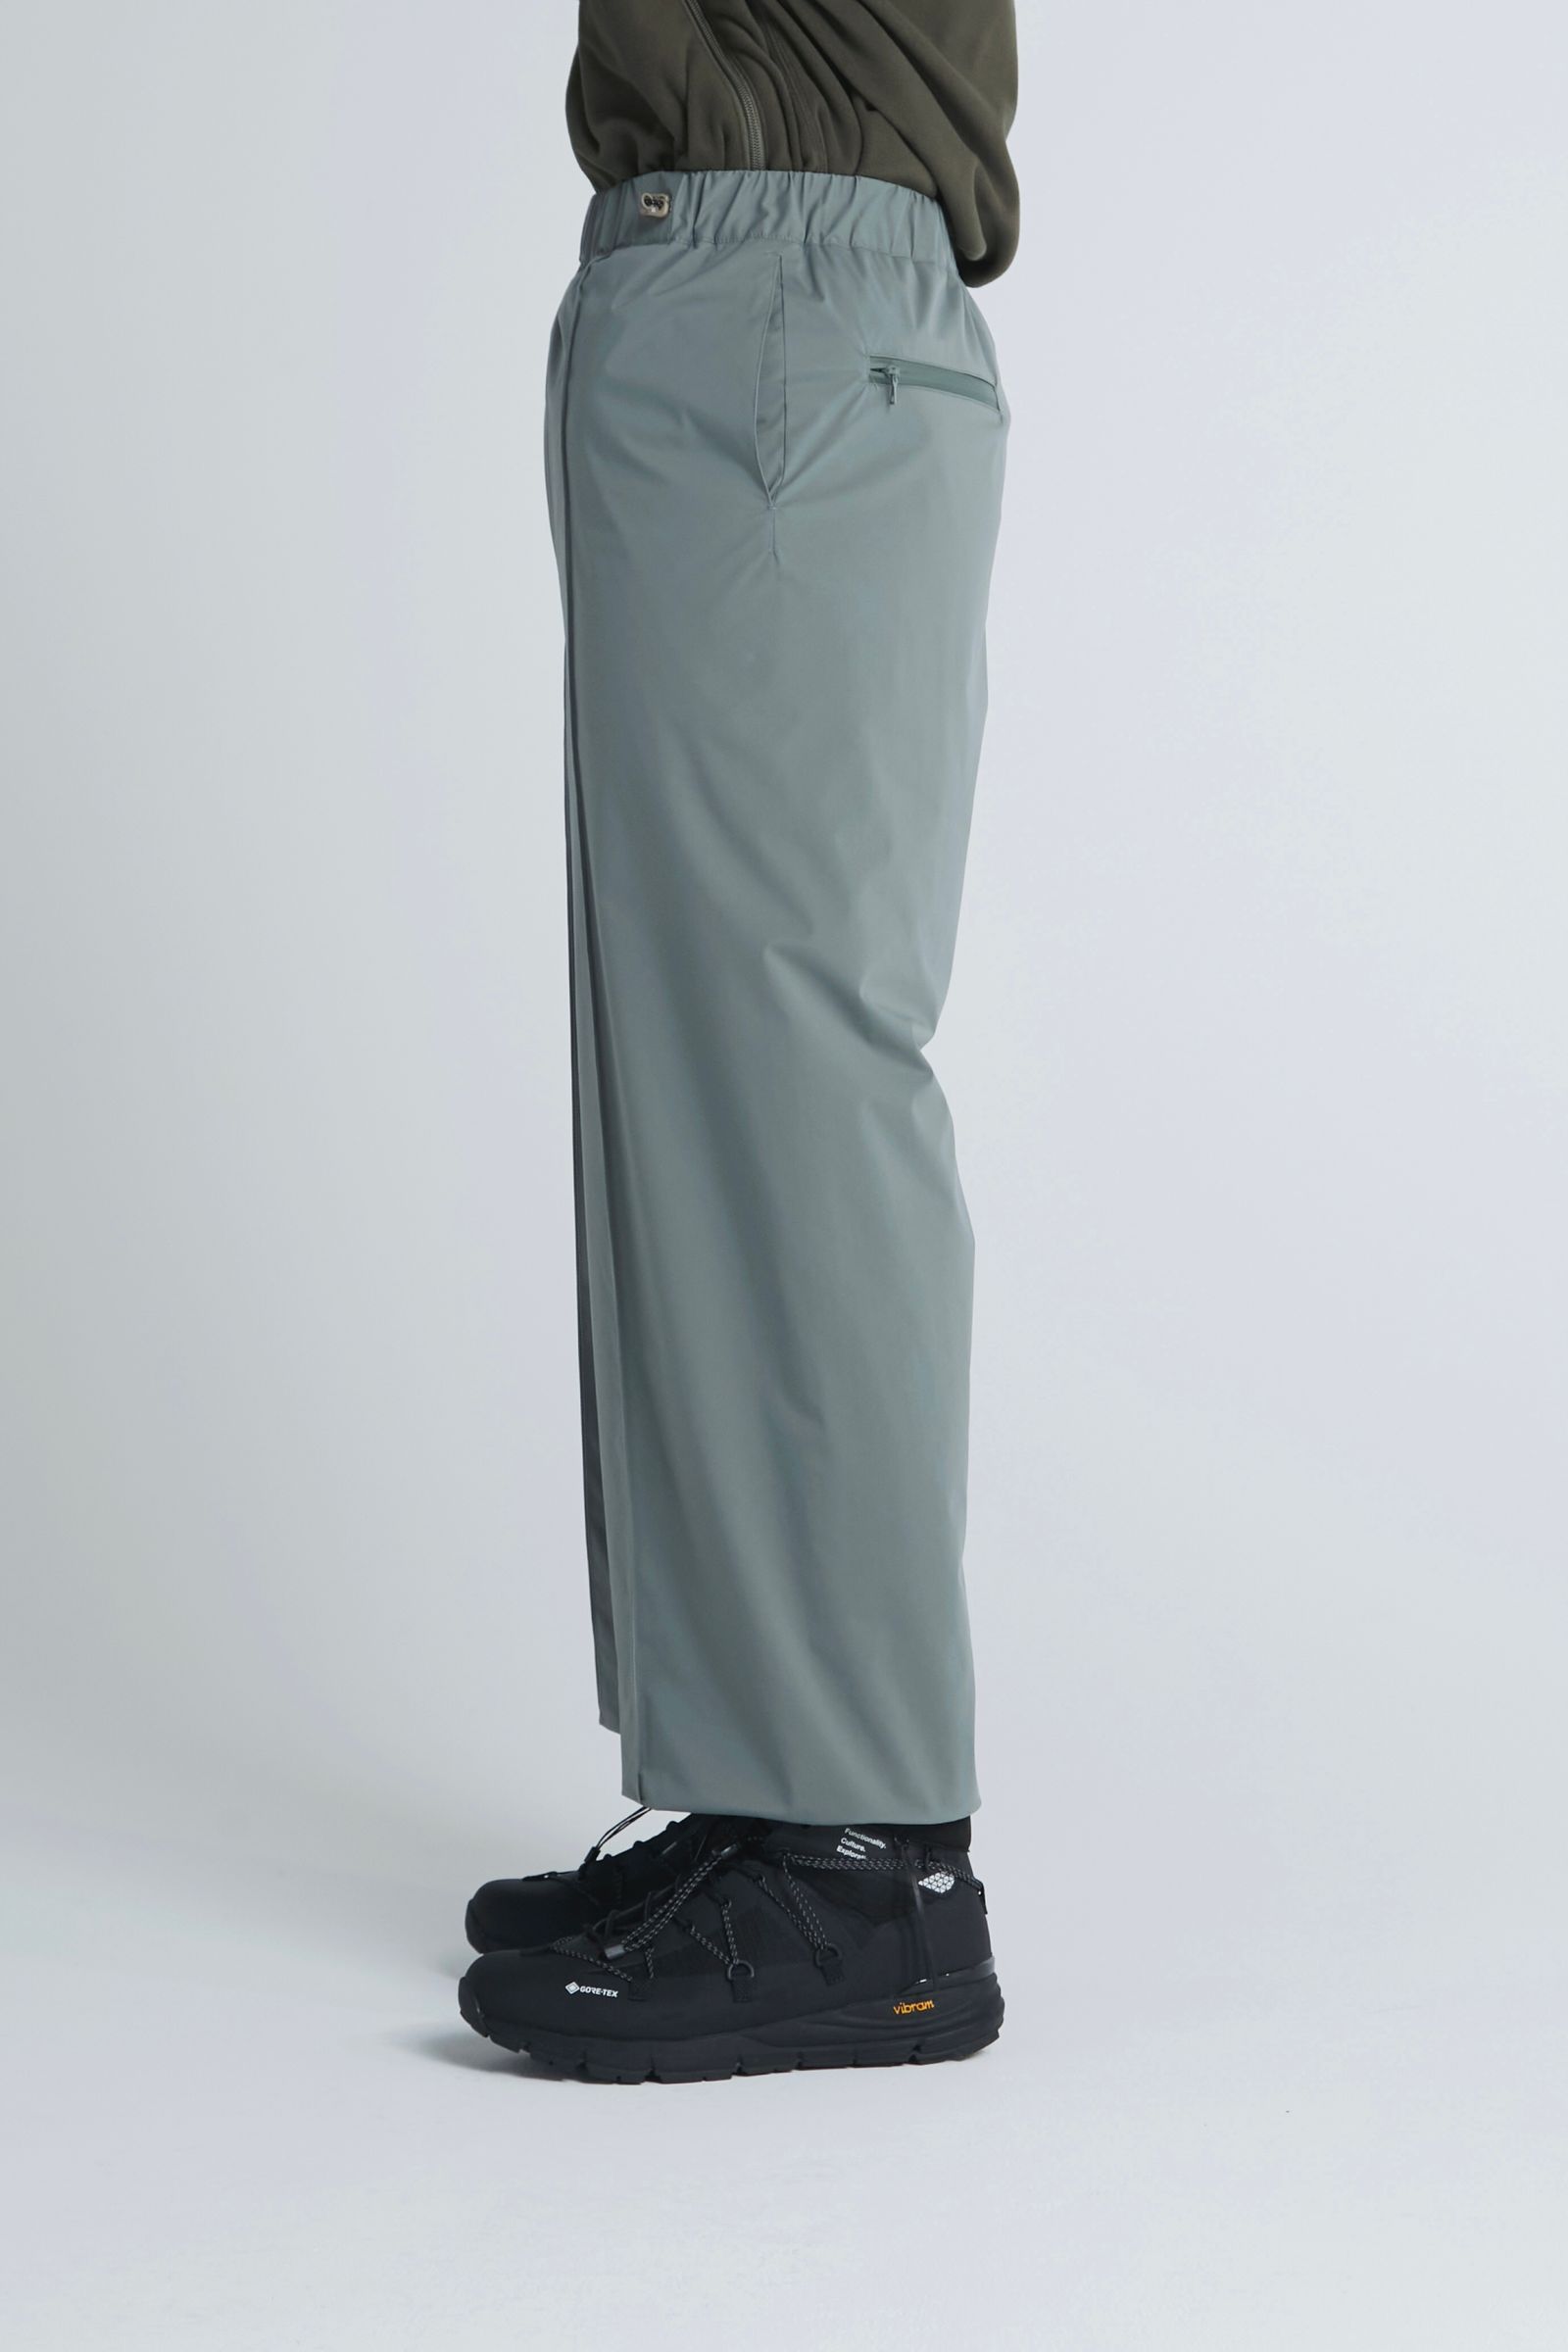 F/CE. - 【先行予約】F/CE.×DIGAWEL PERTEX Pin tuck Lounge Pants -foriage green